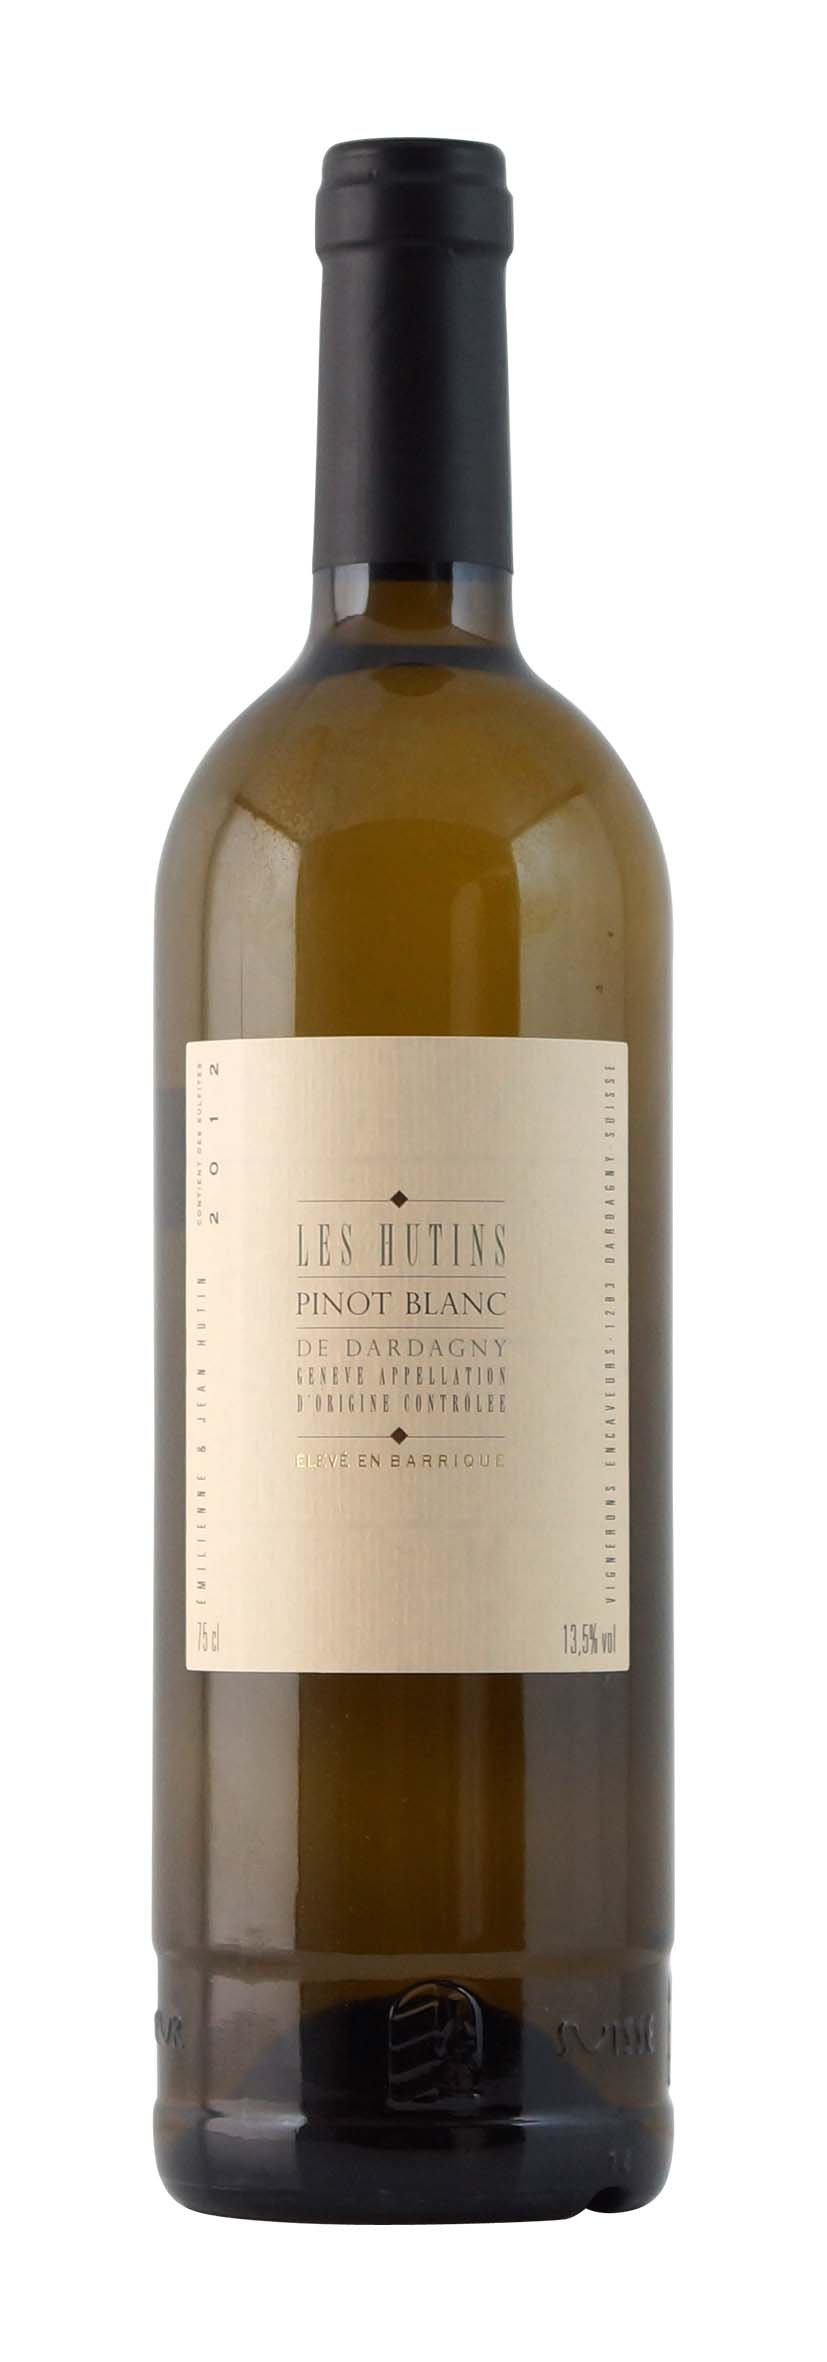 Genève AOC Dardagny Pinot Blanc Barrique 2012